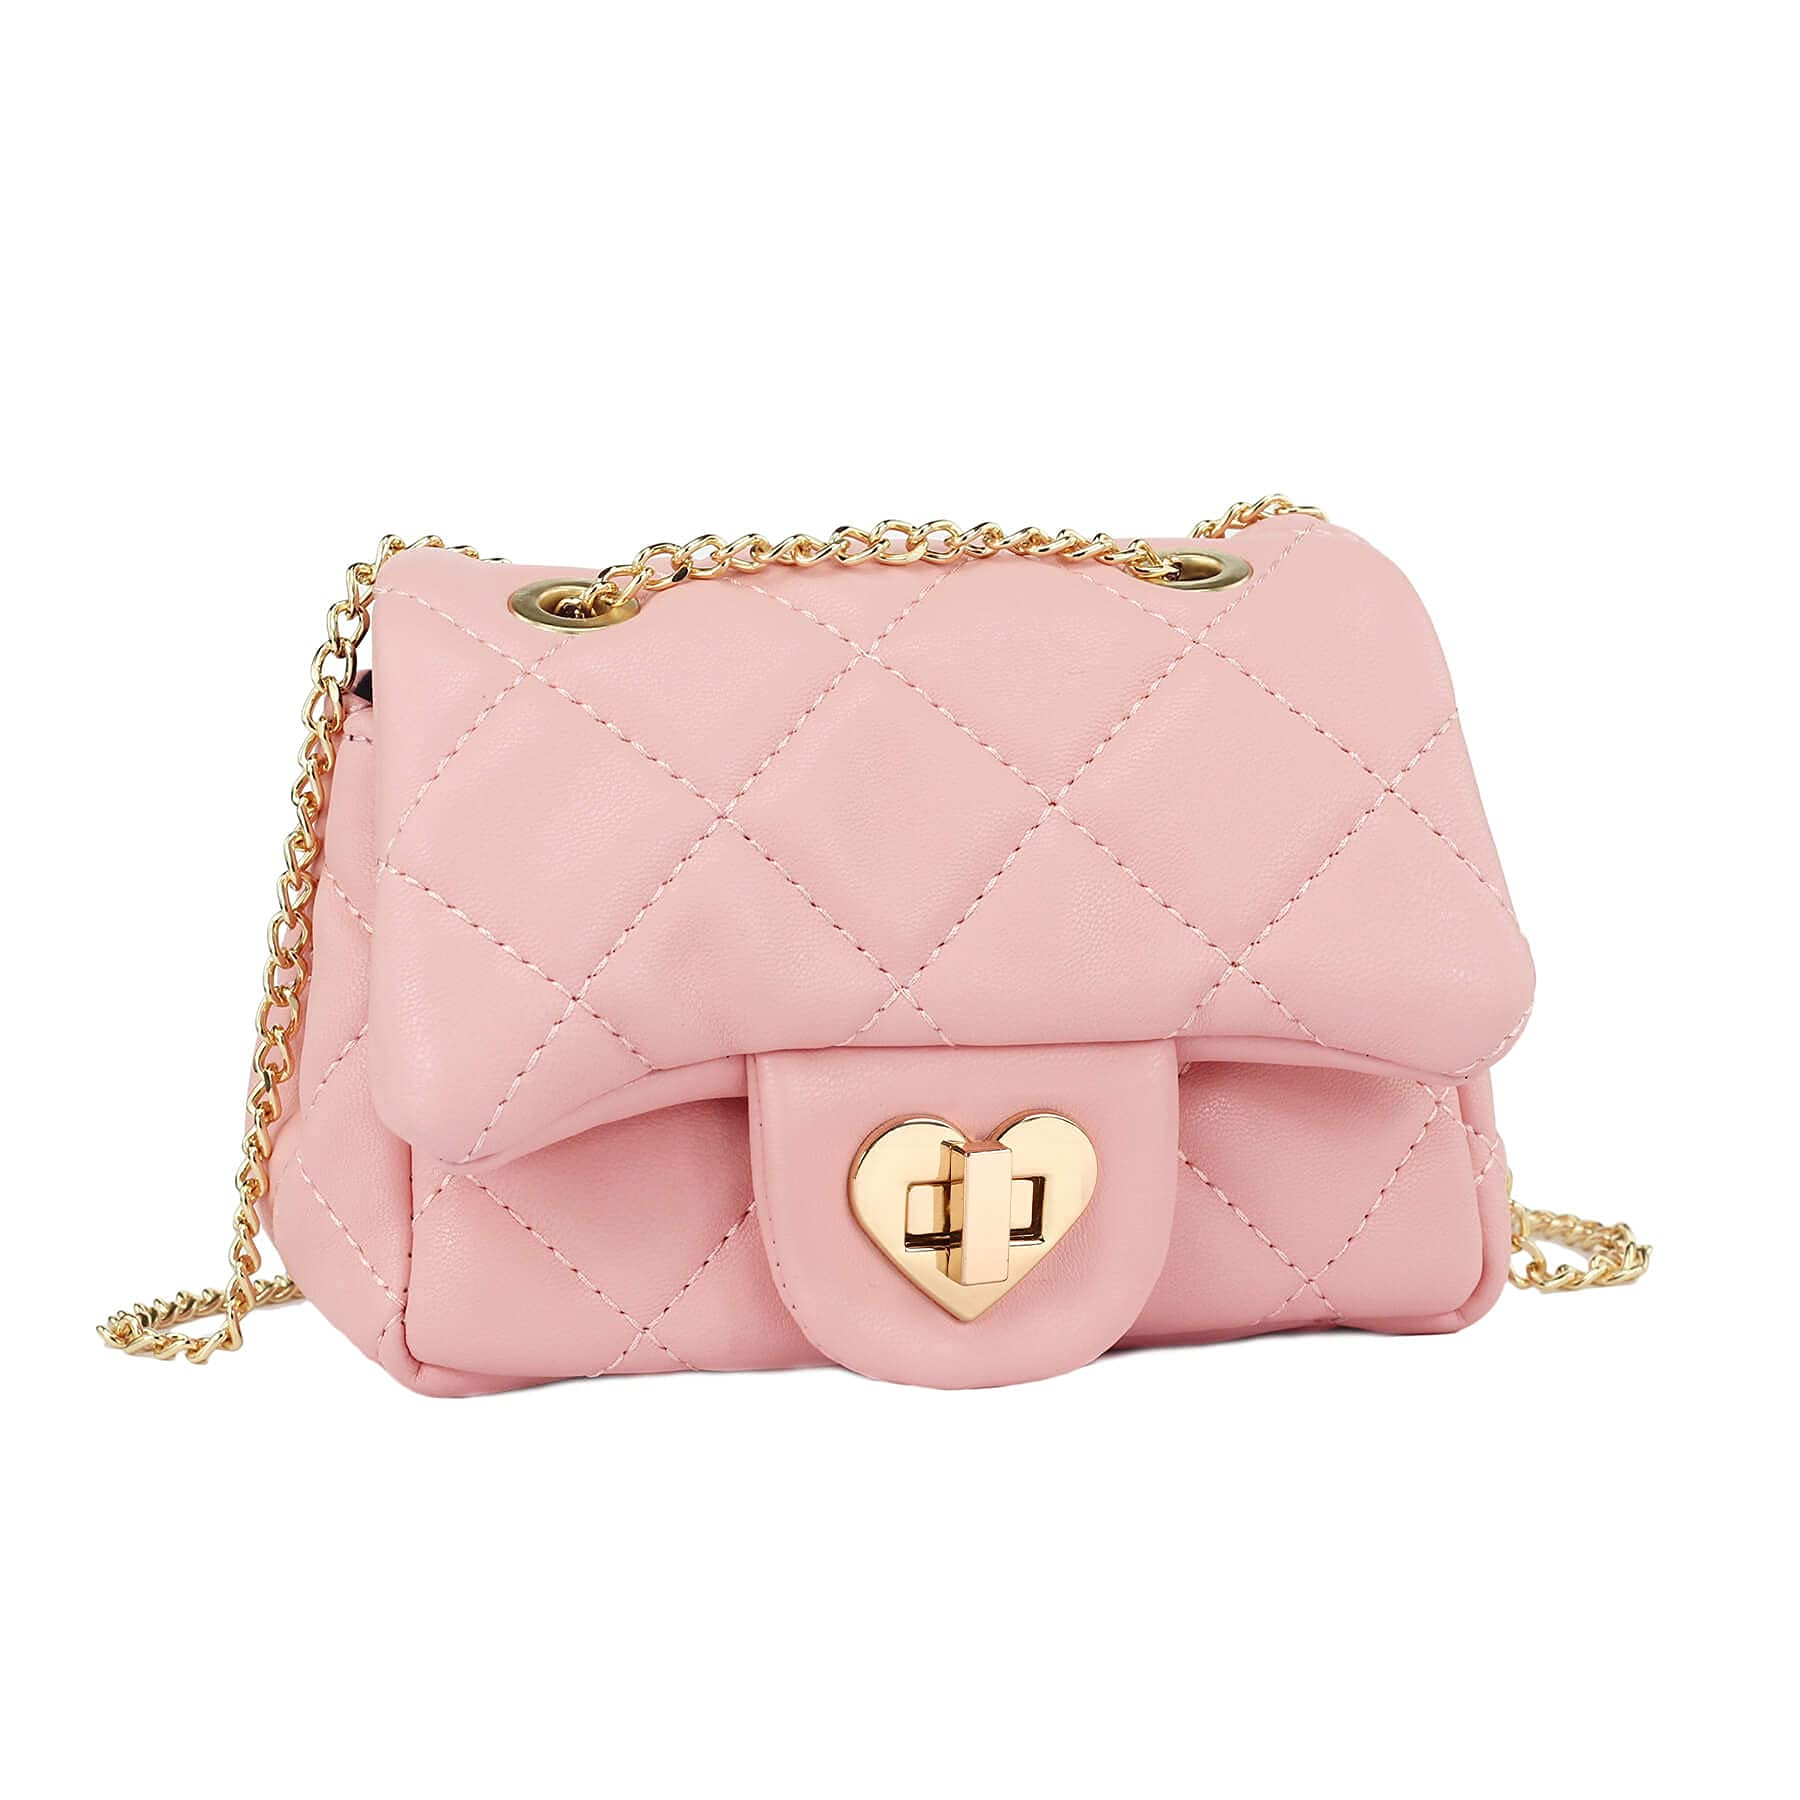 Choosing a fashionable handbag under 100$ | Girly fashion pink, Girly  things, Girly accessories